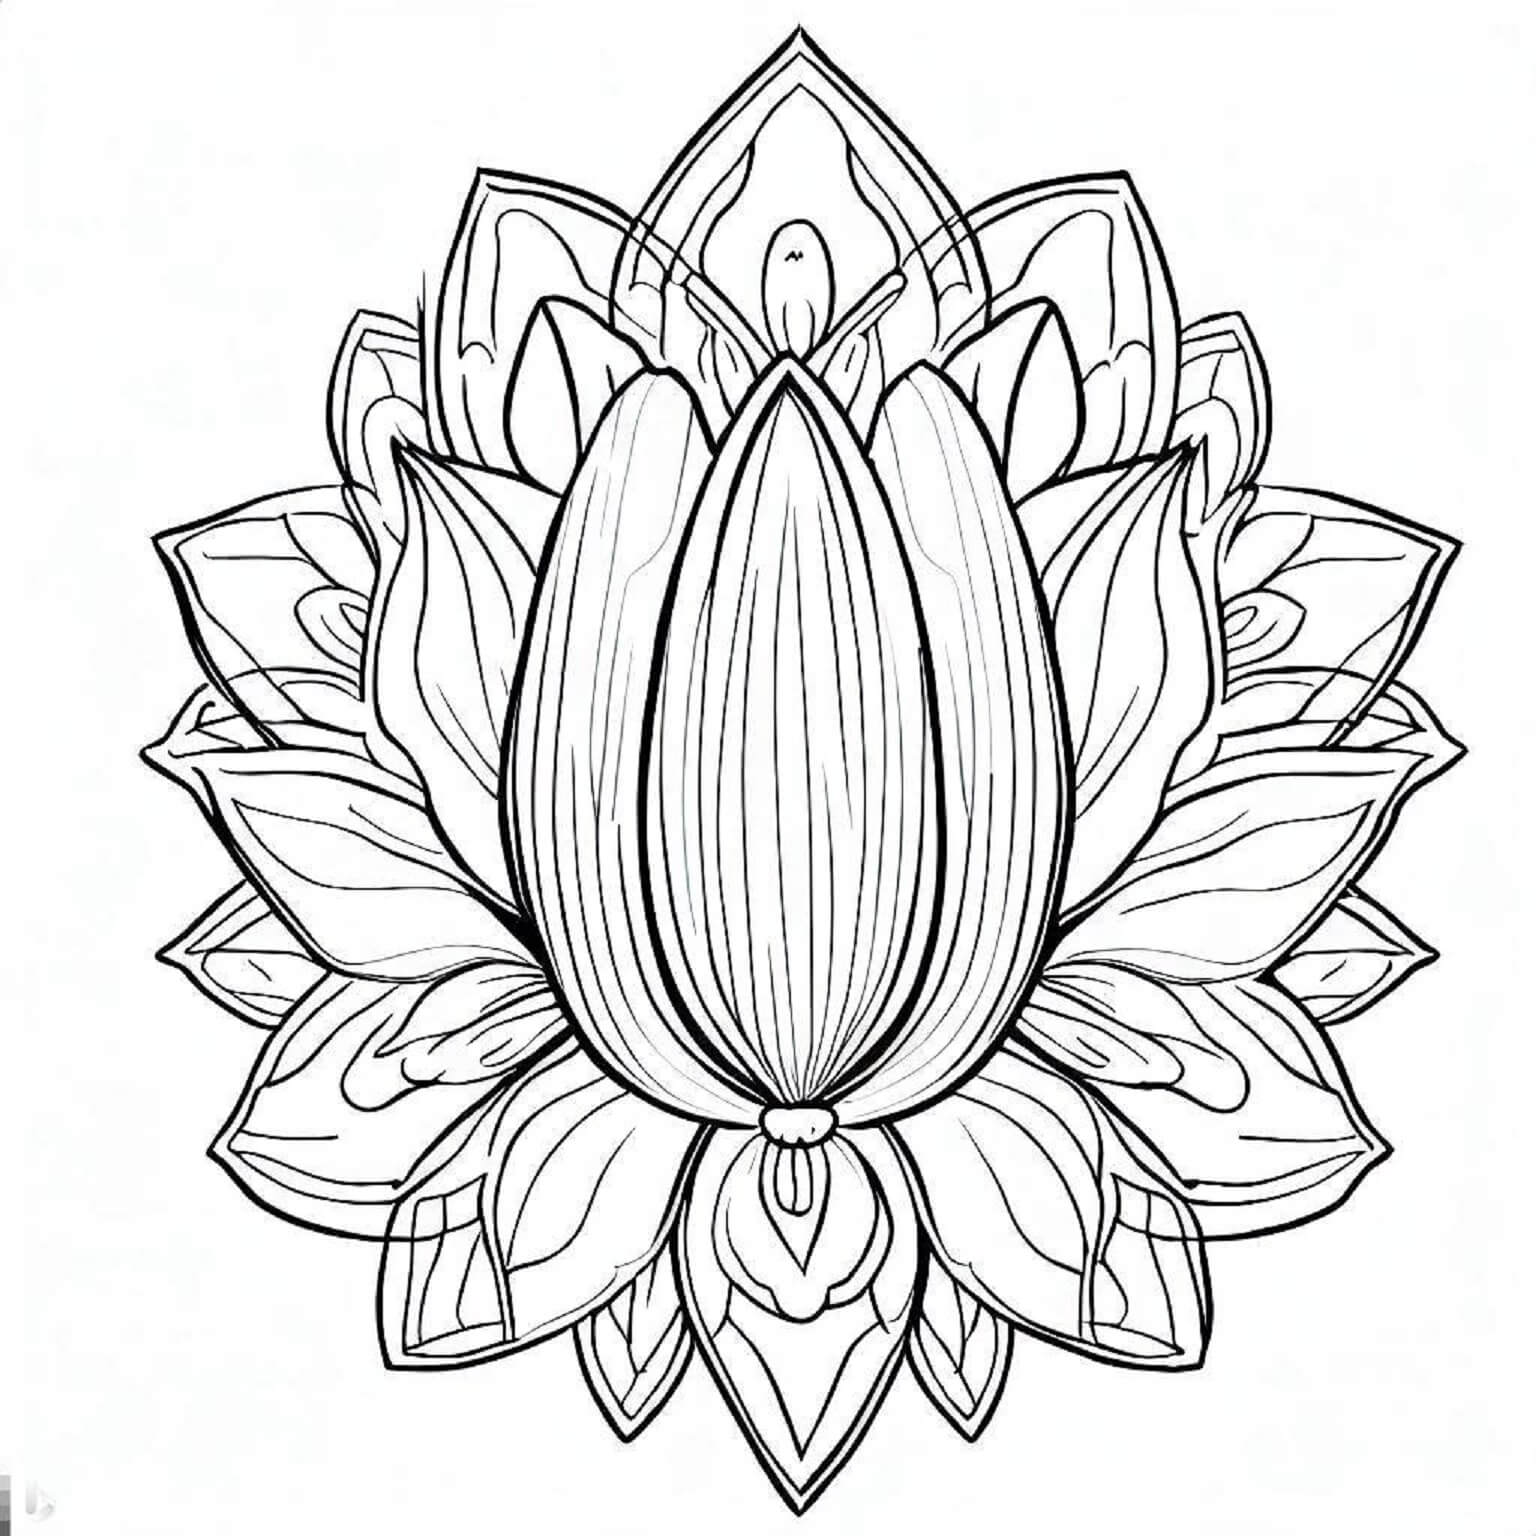 Mandala Tulip Coloring Page - Sheet 7 Mandalas